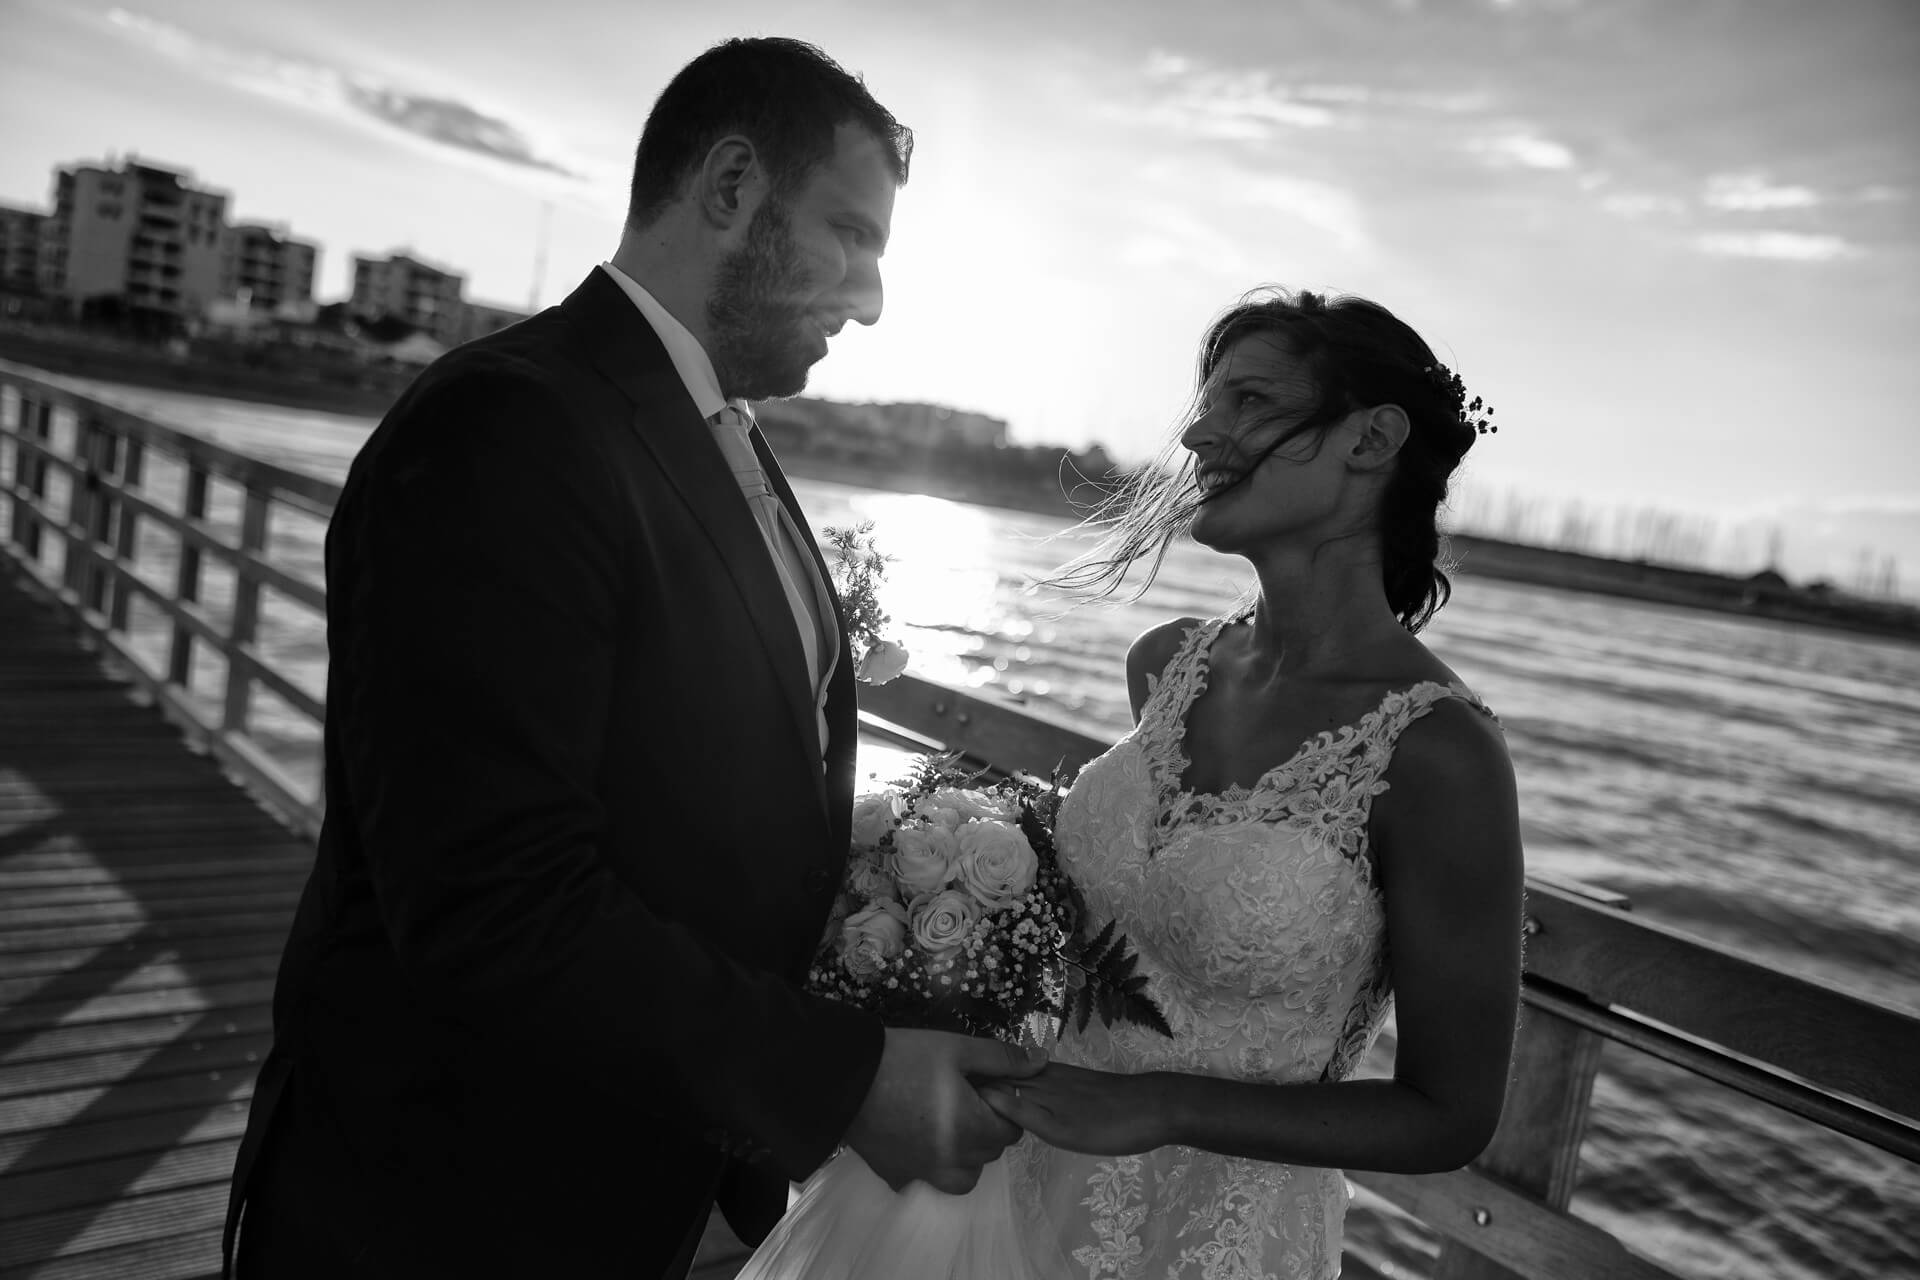 Fotografo matrimonio, cerimonie, anniversari - Marco Donà Lignano Udine Trieste